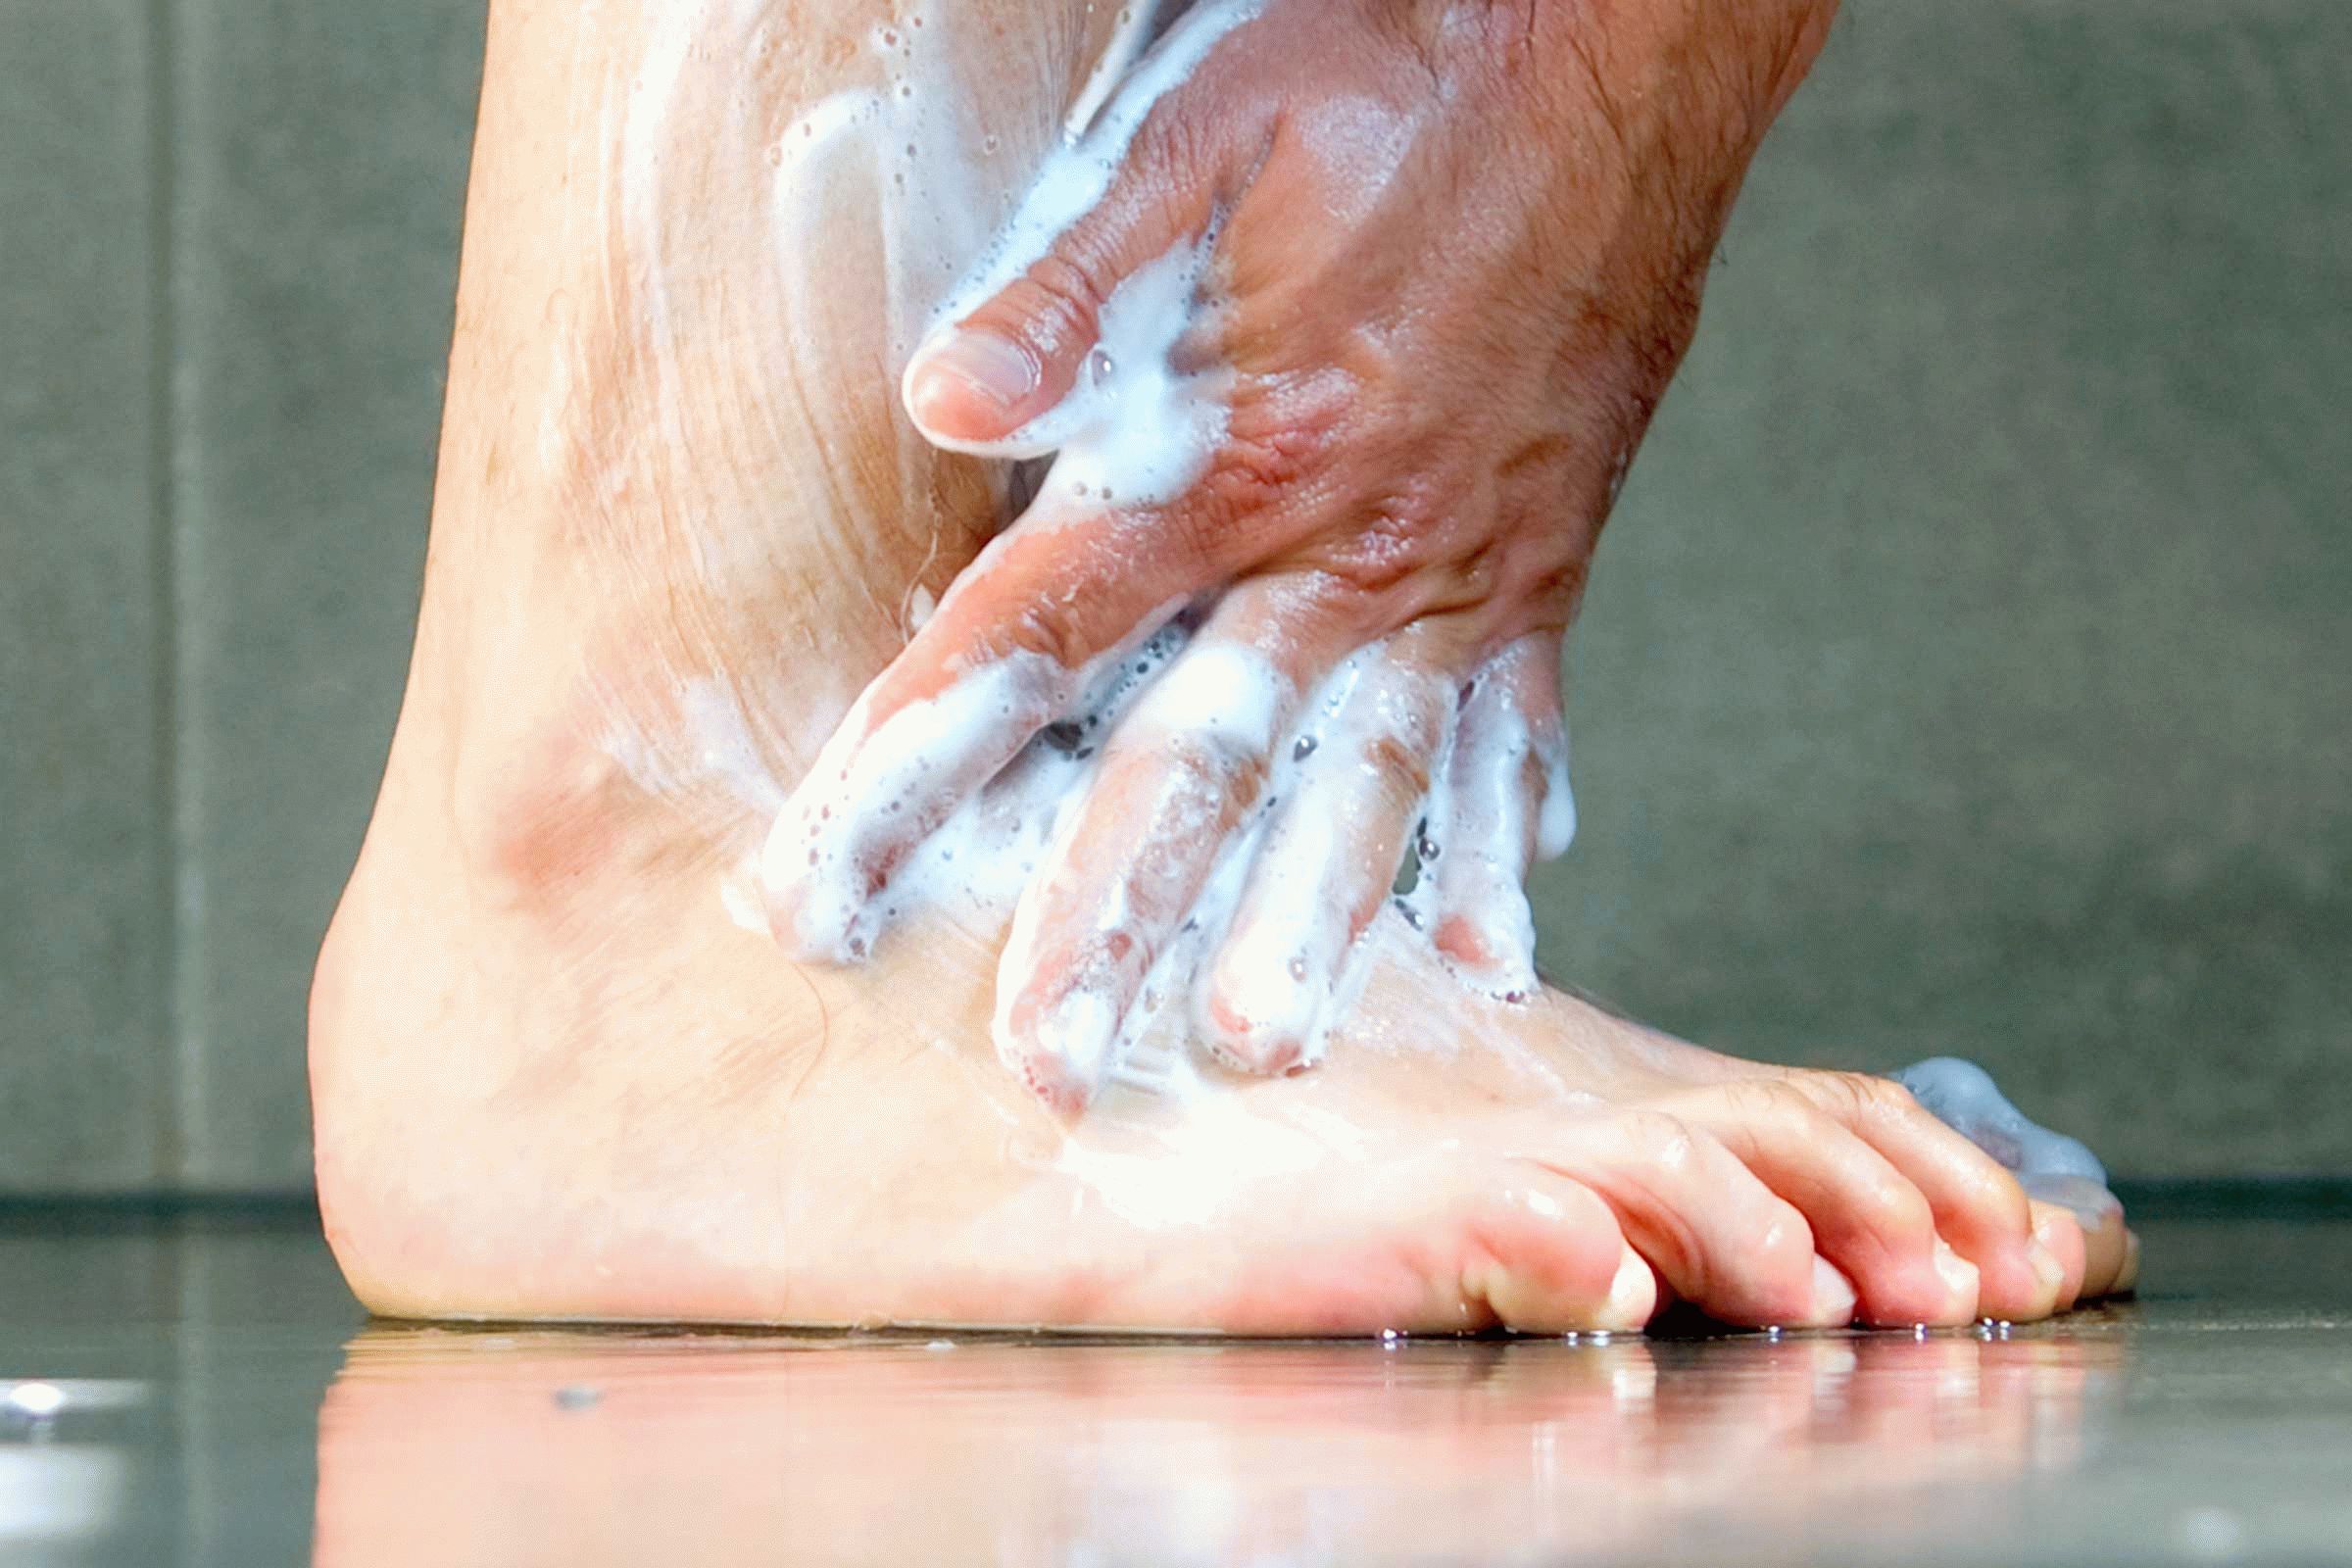 Мытье ног